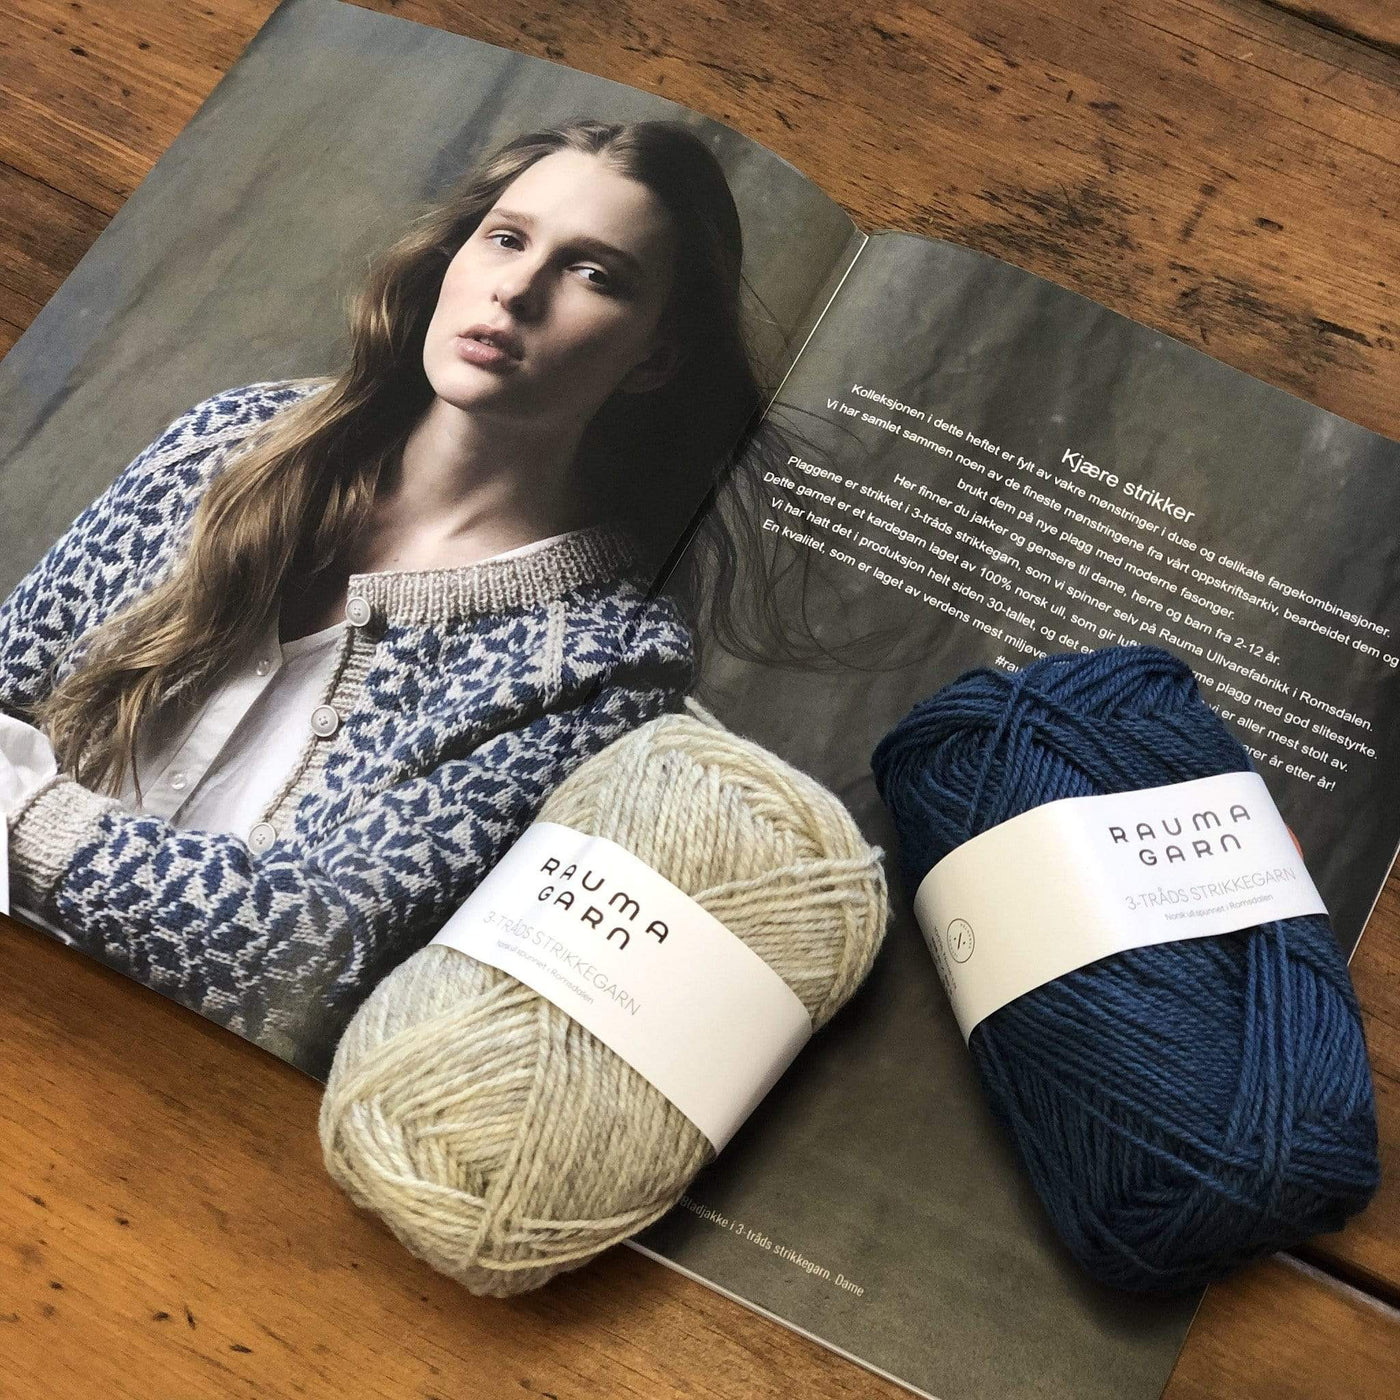 The Woolly Thistle Bladjakke Cardigan 288-1 in Rauma Strikkegarn and 2 balls of yarn in beige and dark blue